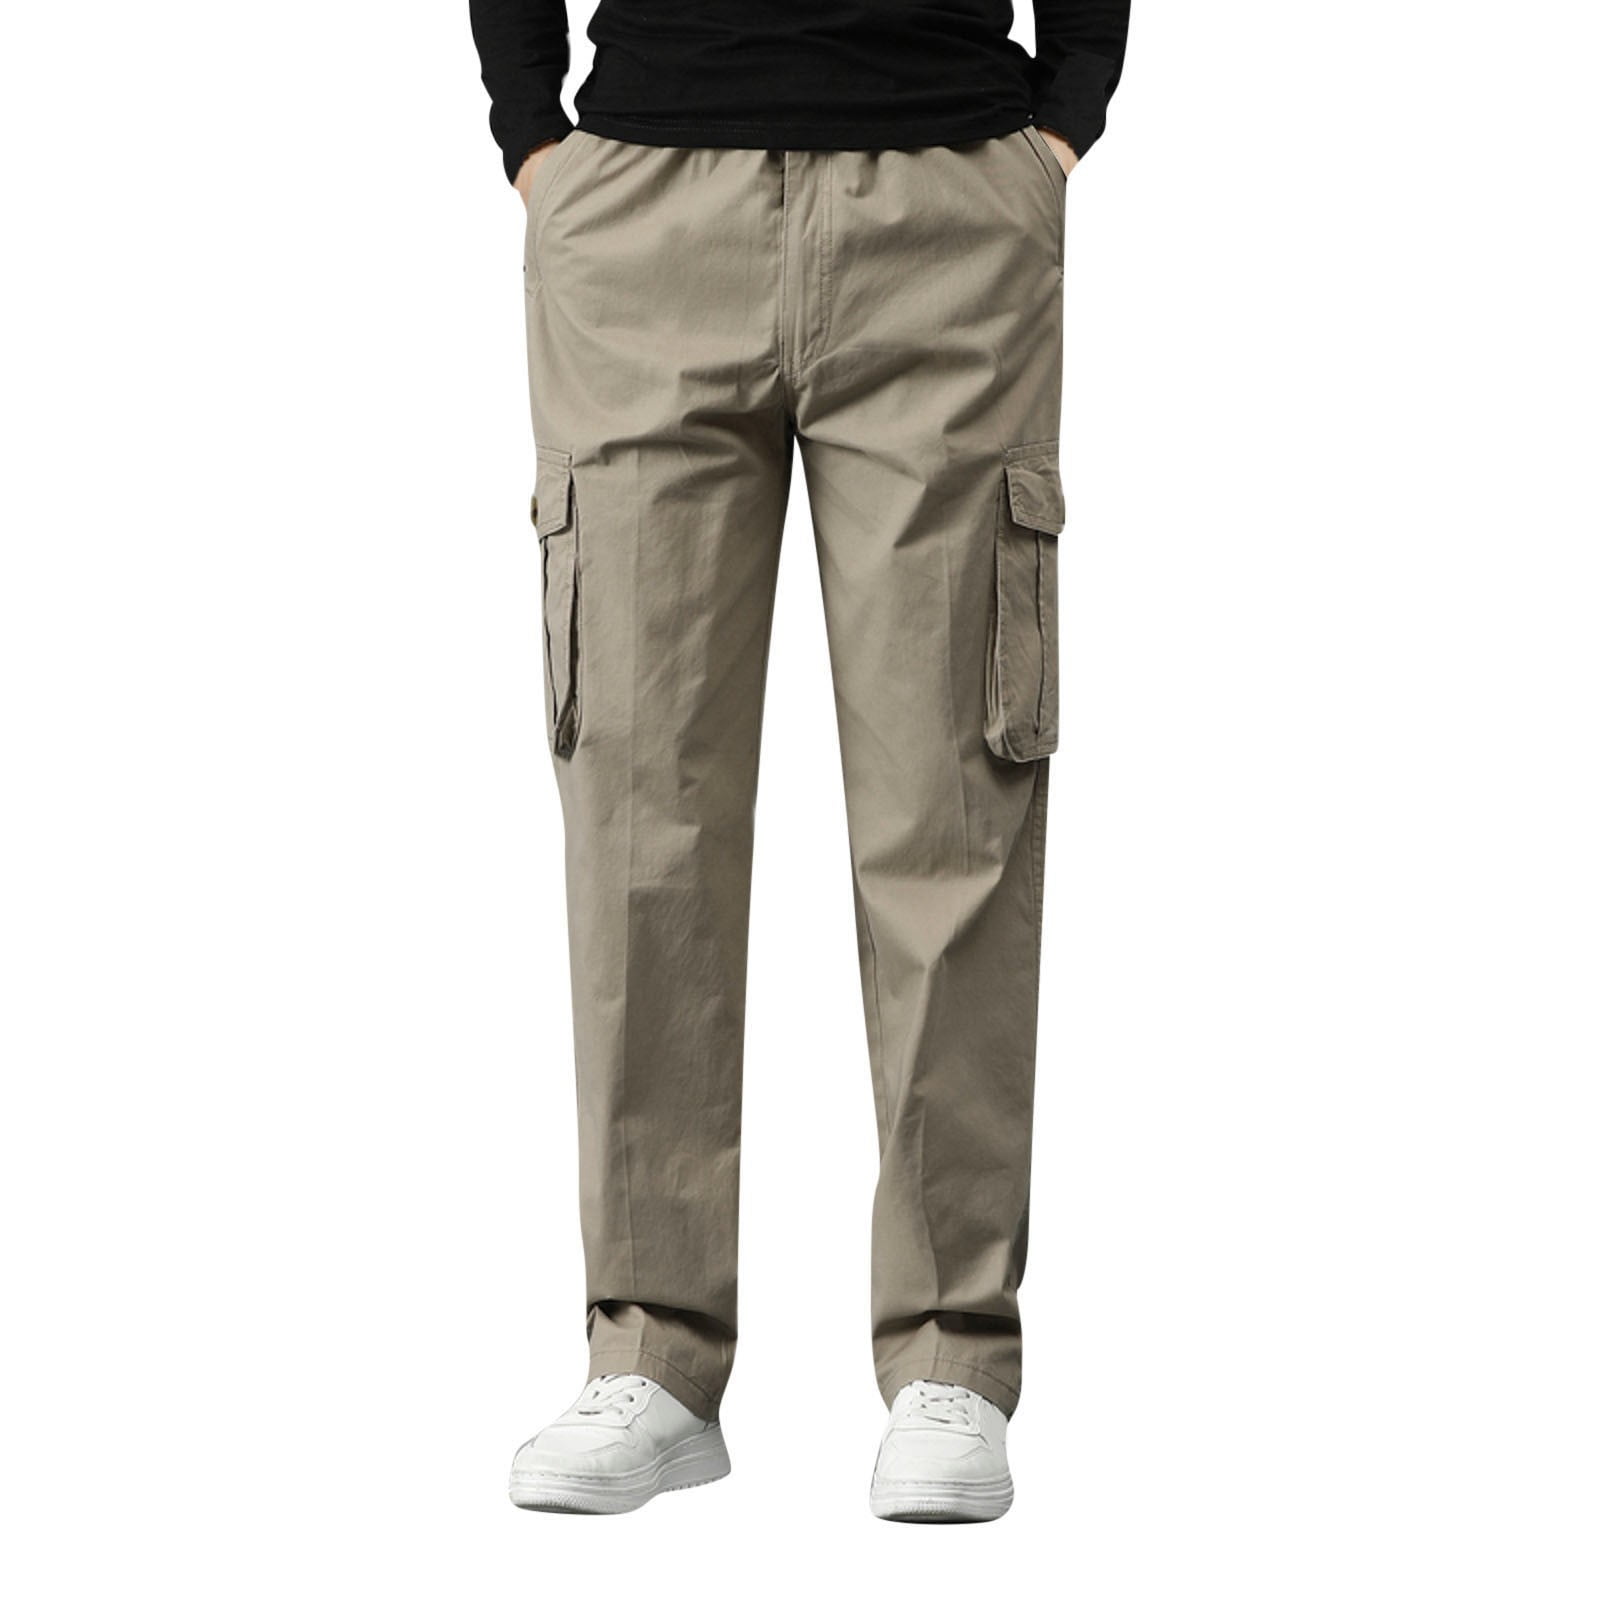 trousers CRG model: 2020 color: black size: 46 prespo kart - kartsport